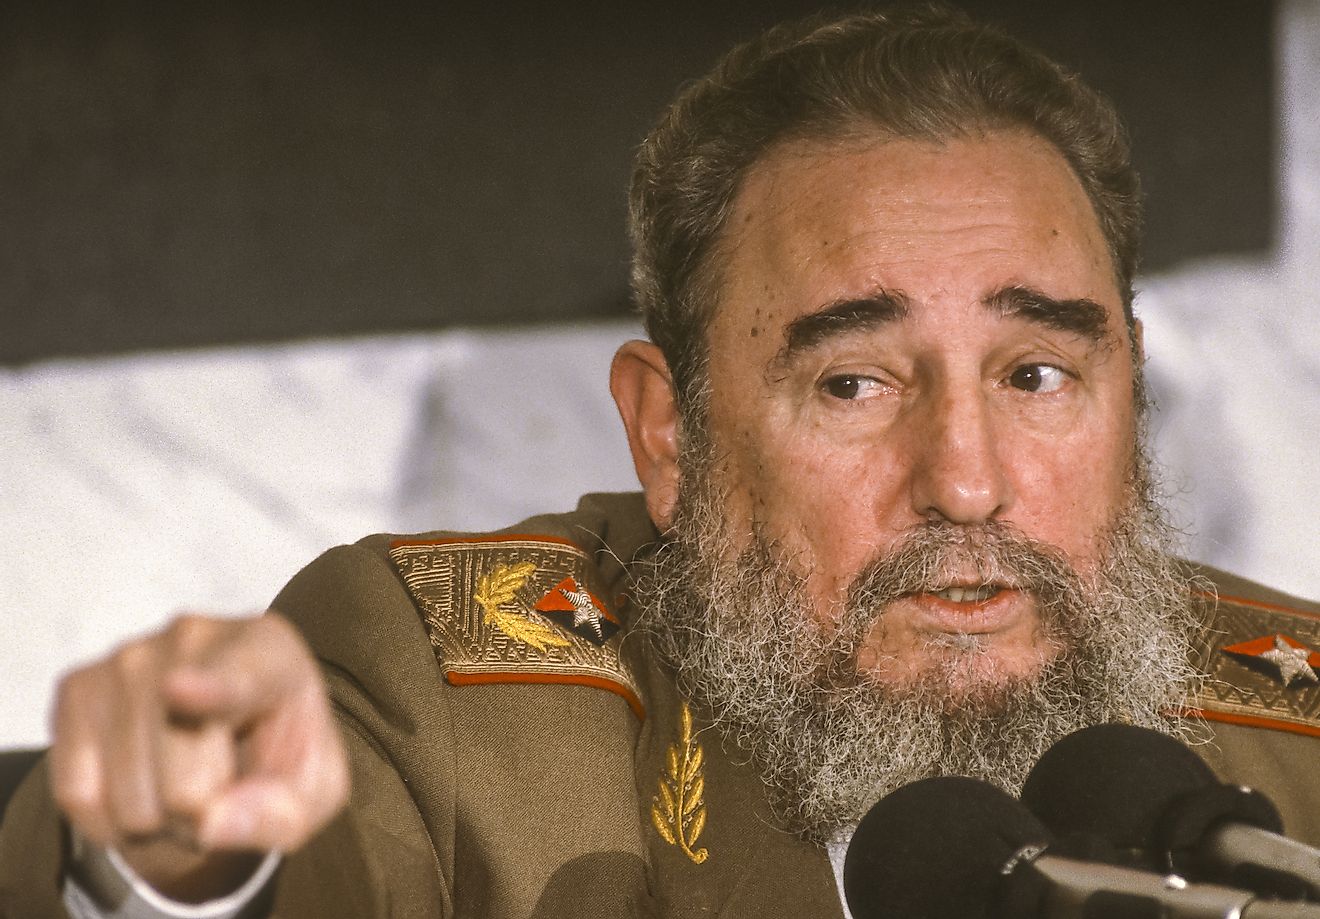 Cuba, February, 1989: Fidel Castro, President of Cuba, during news conference. Image credit: Rob Crandall/Shutterstock.com